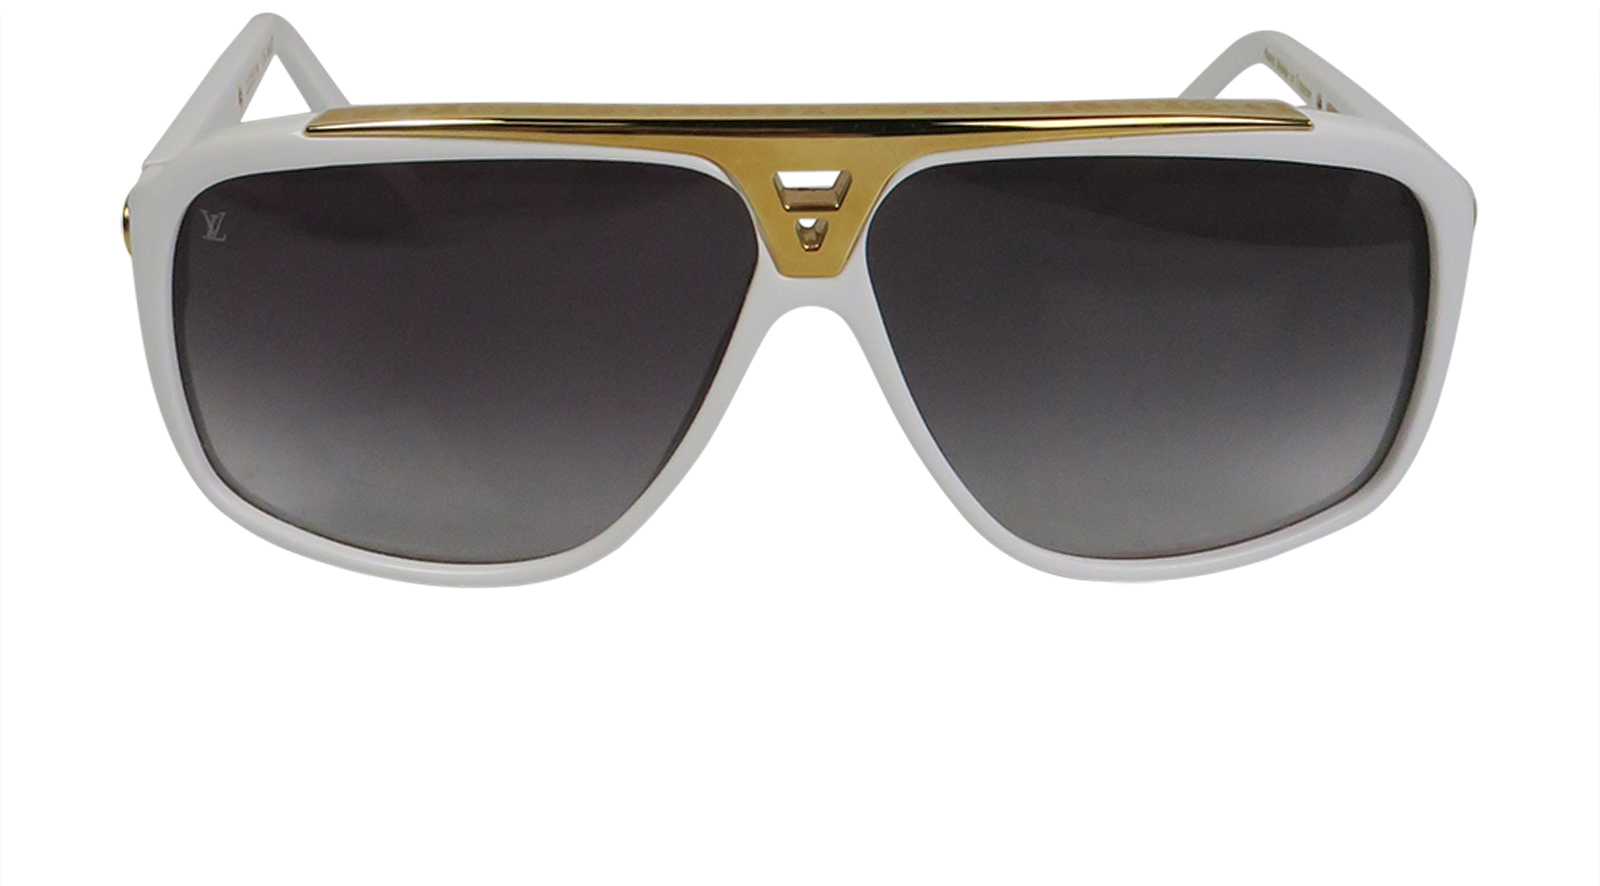 Louis Vuitton evidence sunglasses